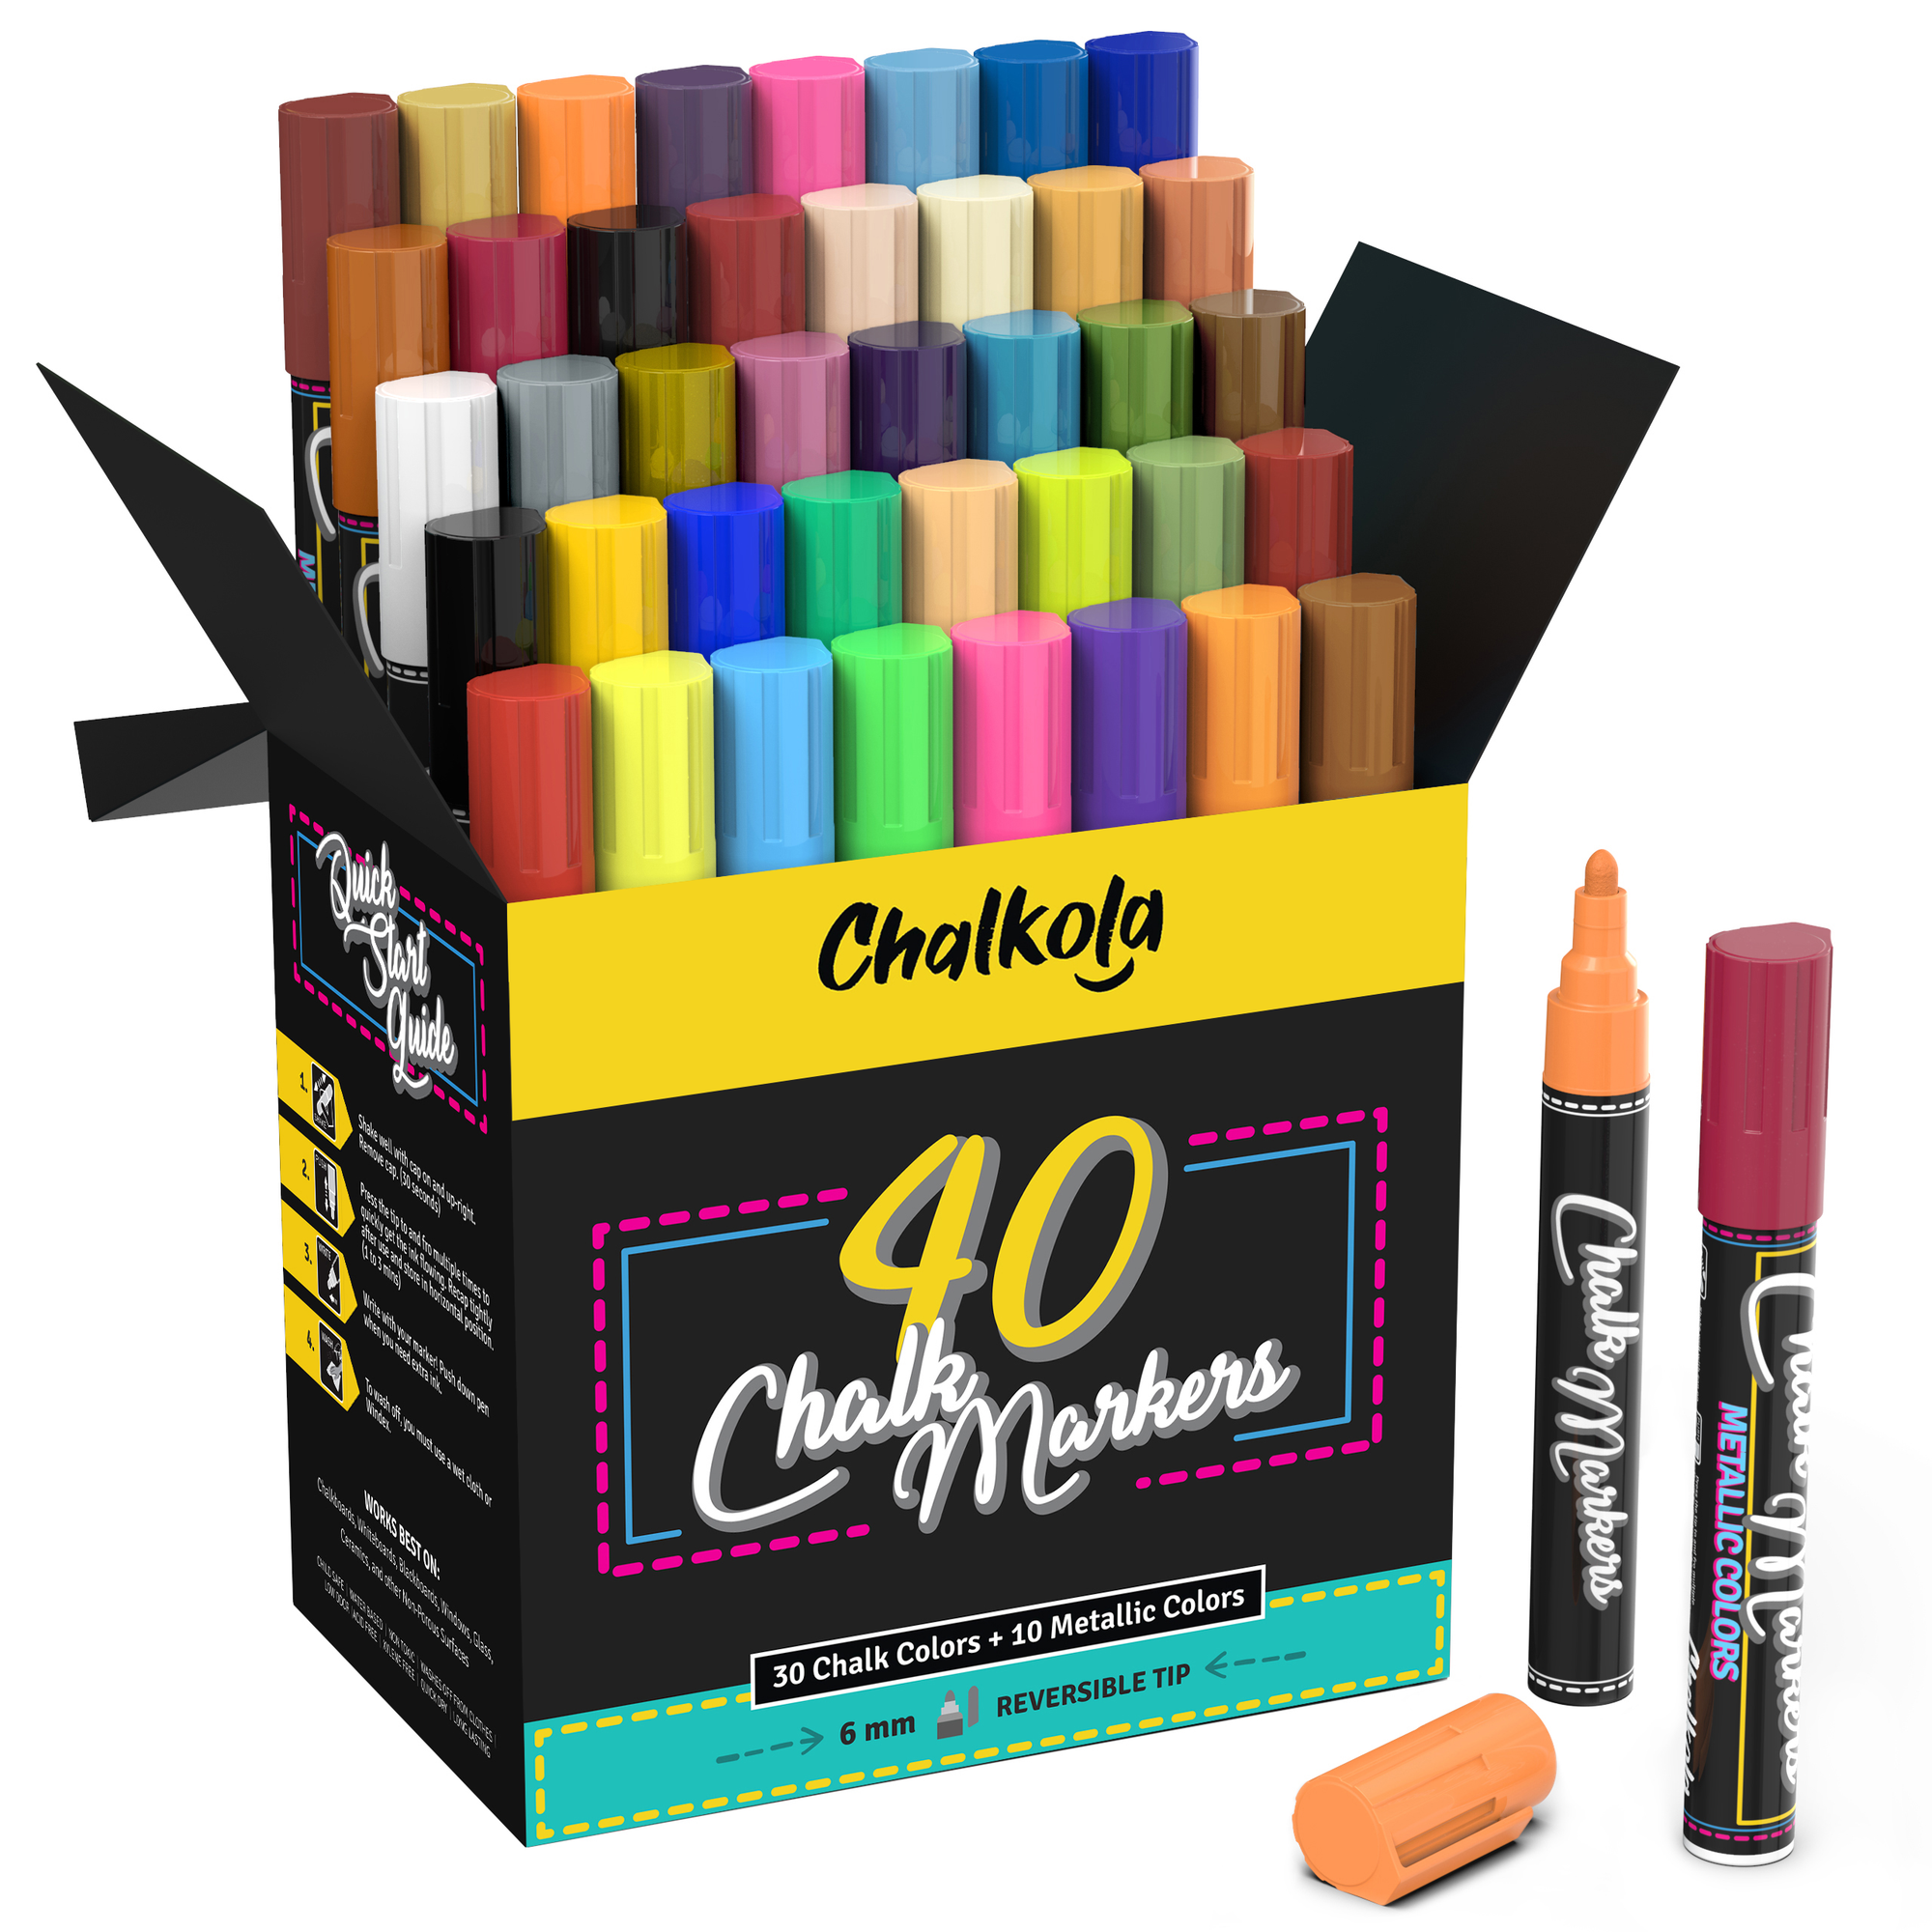 Acrylic Paint Marker Pens - Variety Pack of 6, Extra Fine & Medium Tip -  Chalkola Art Supply